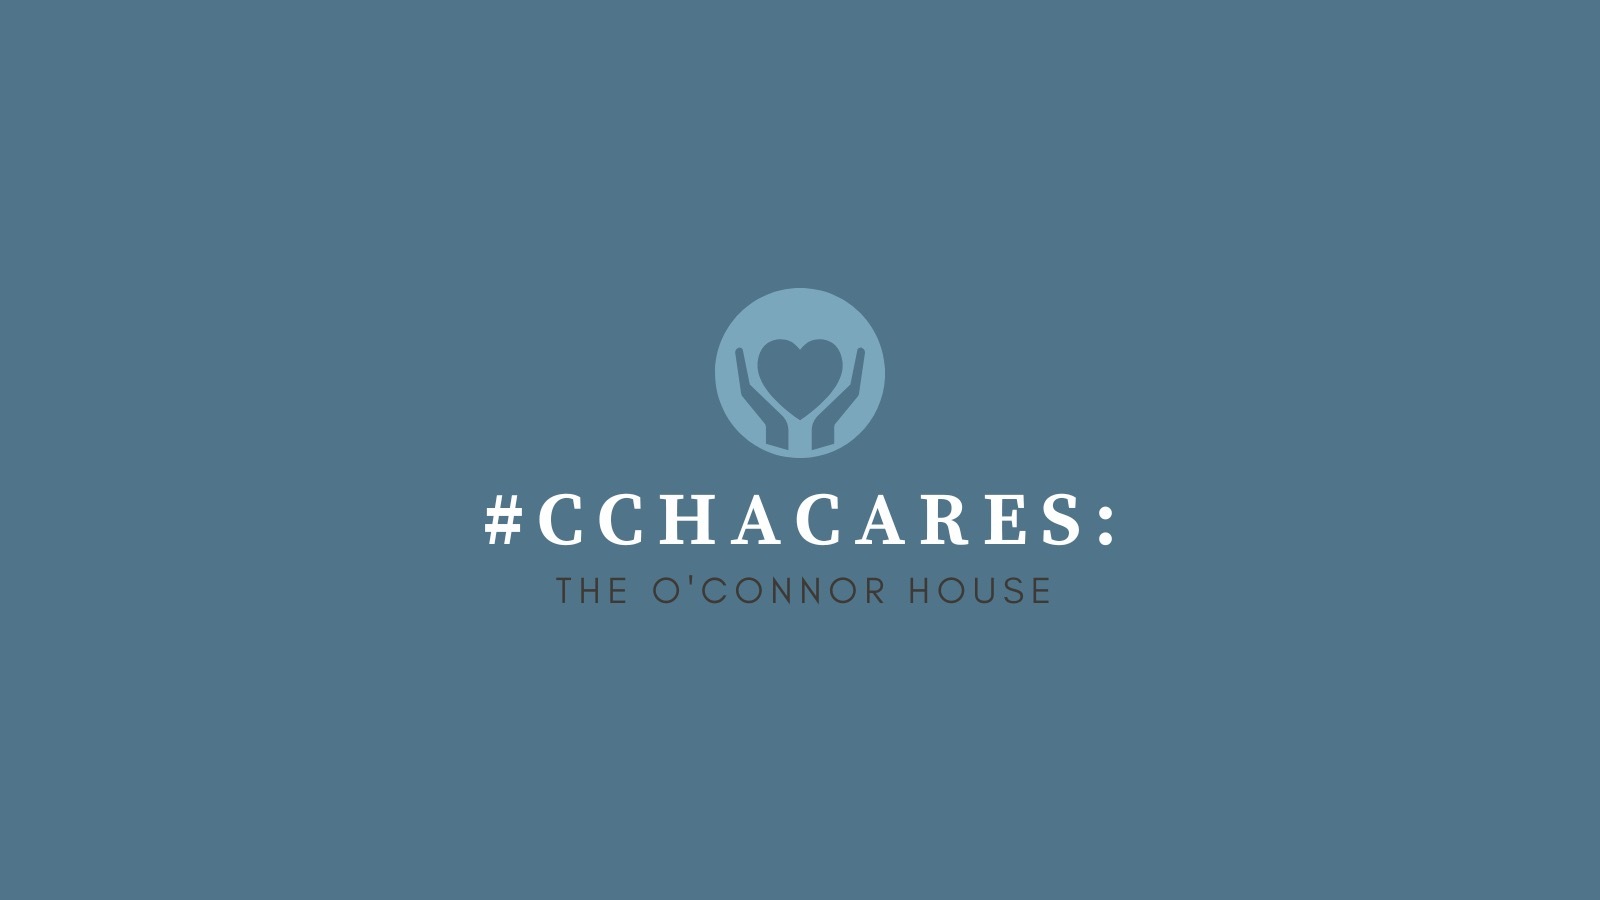 CCHA CARES Graphic